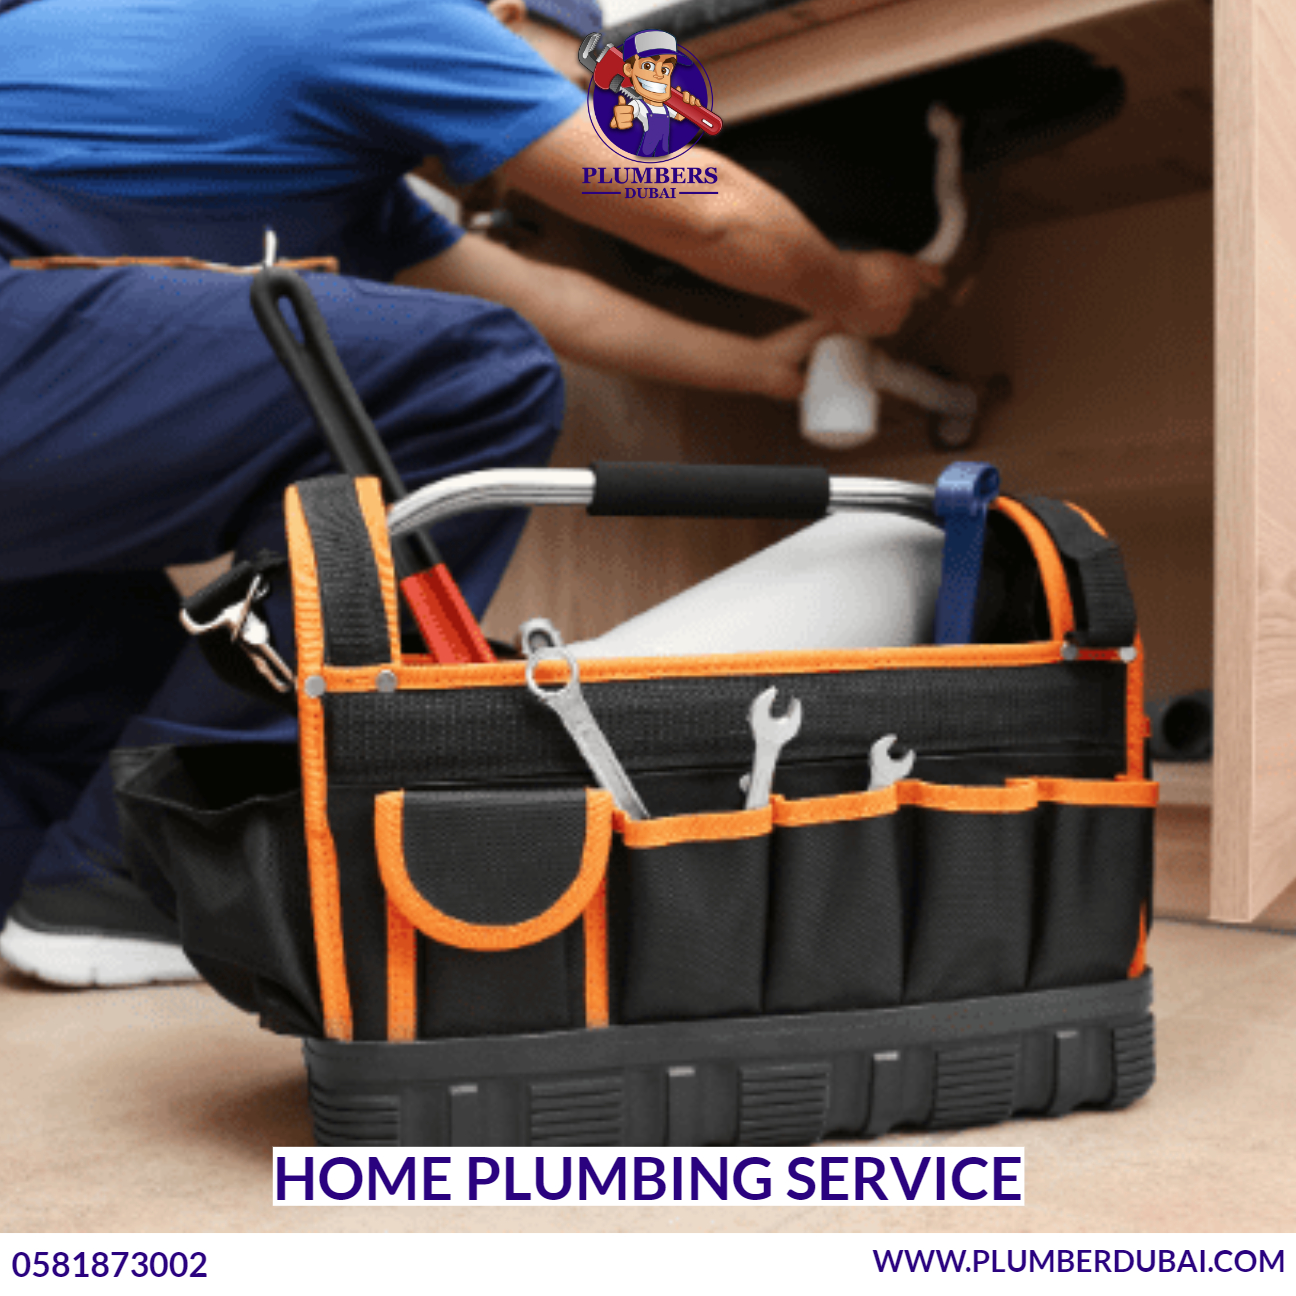 Home Plumbing Service